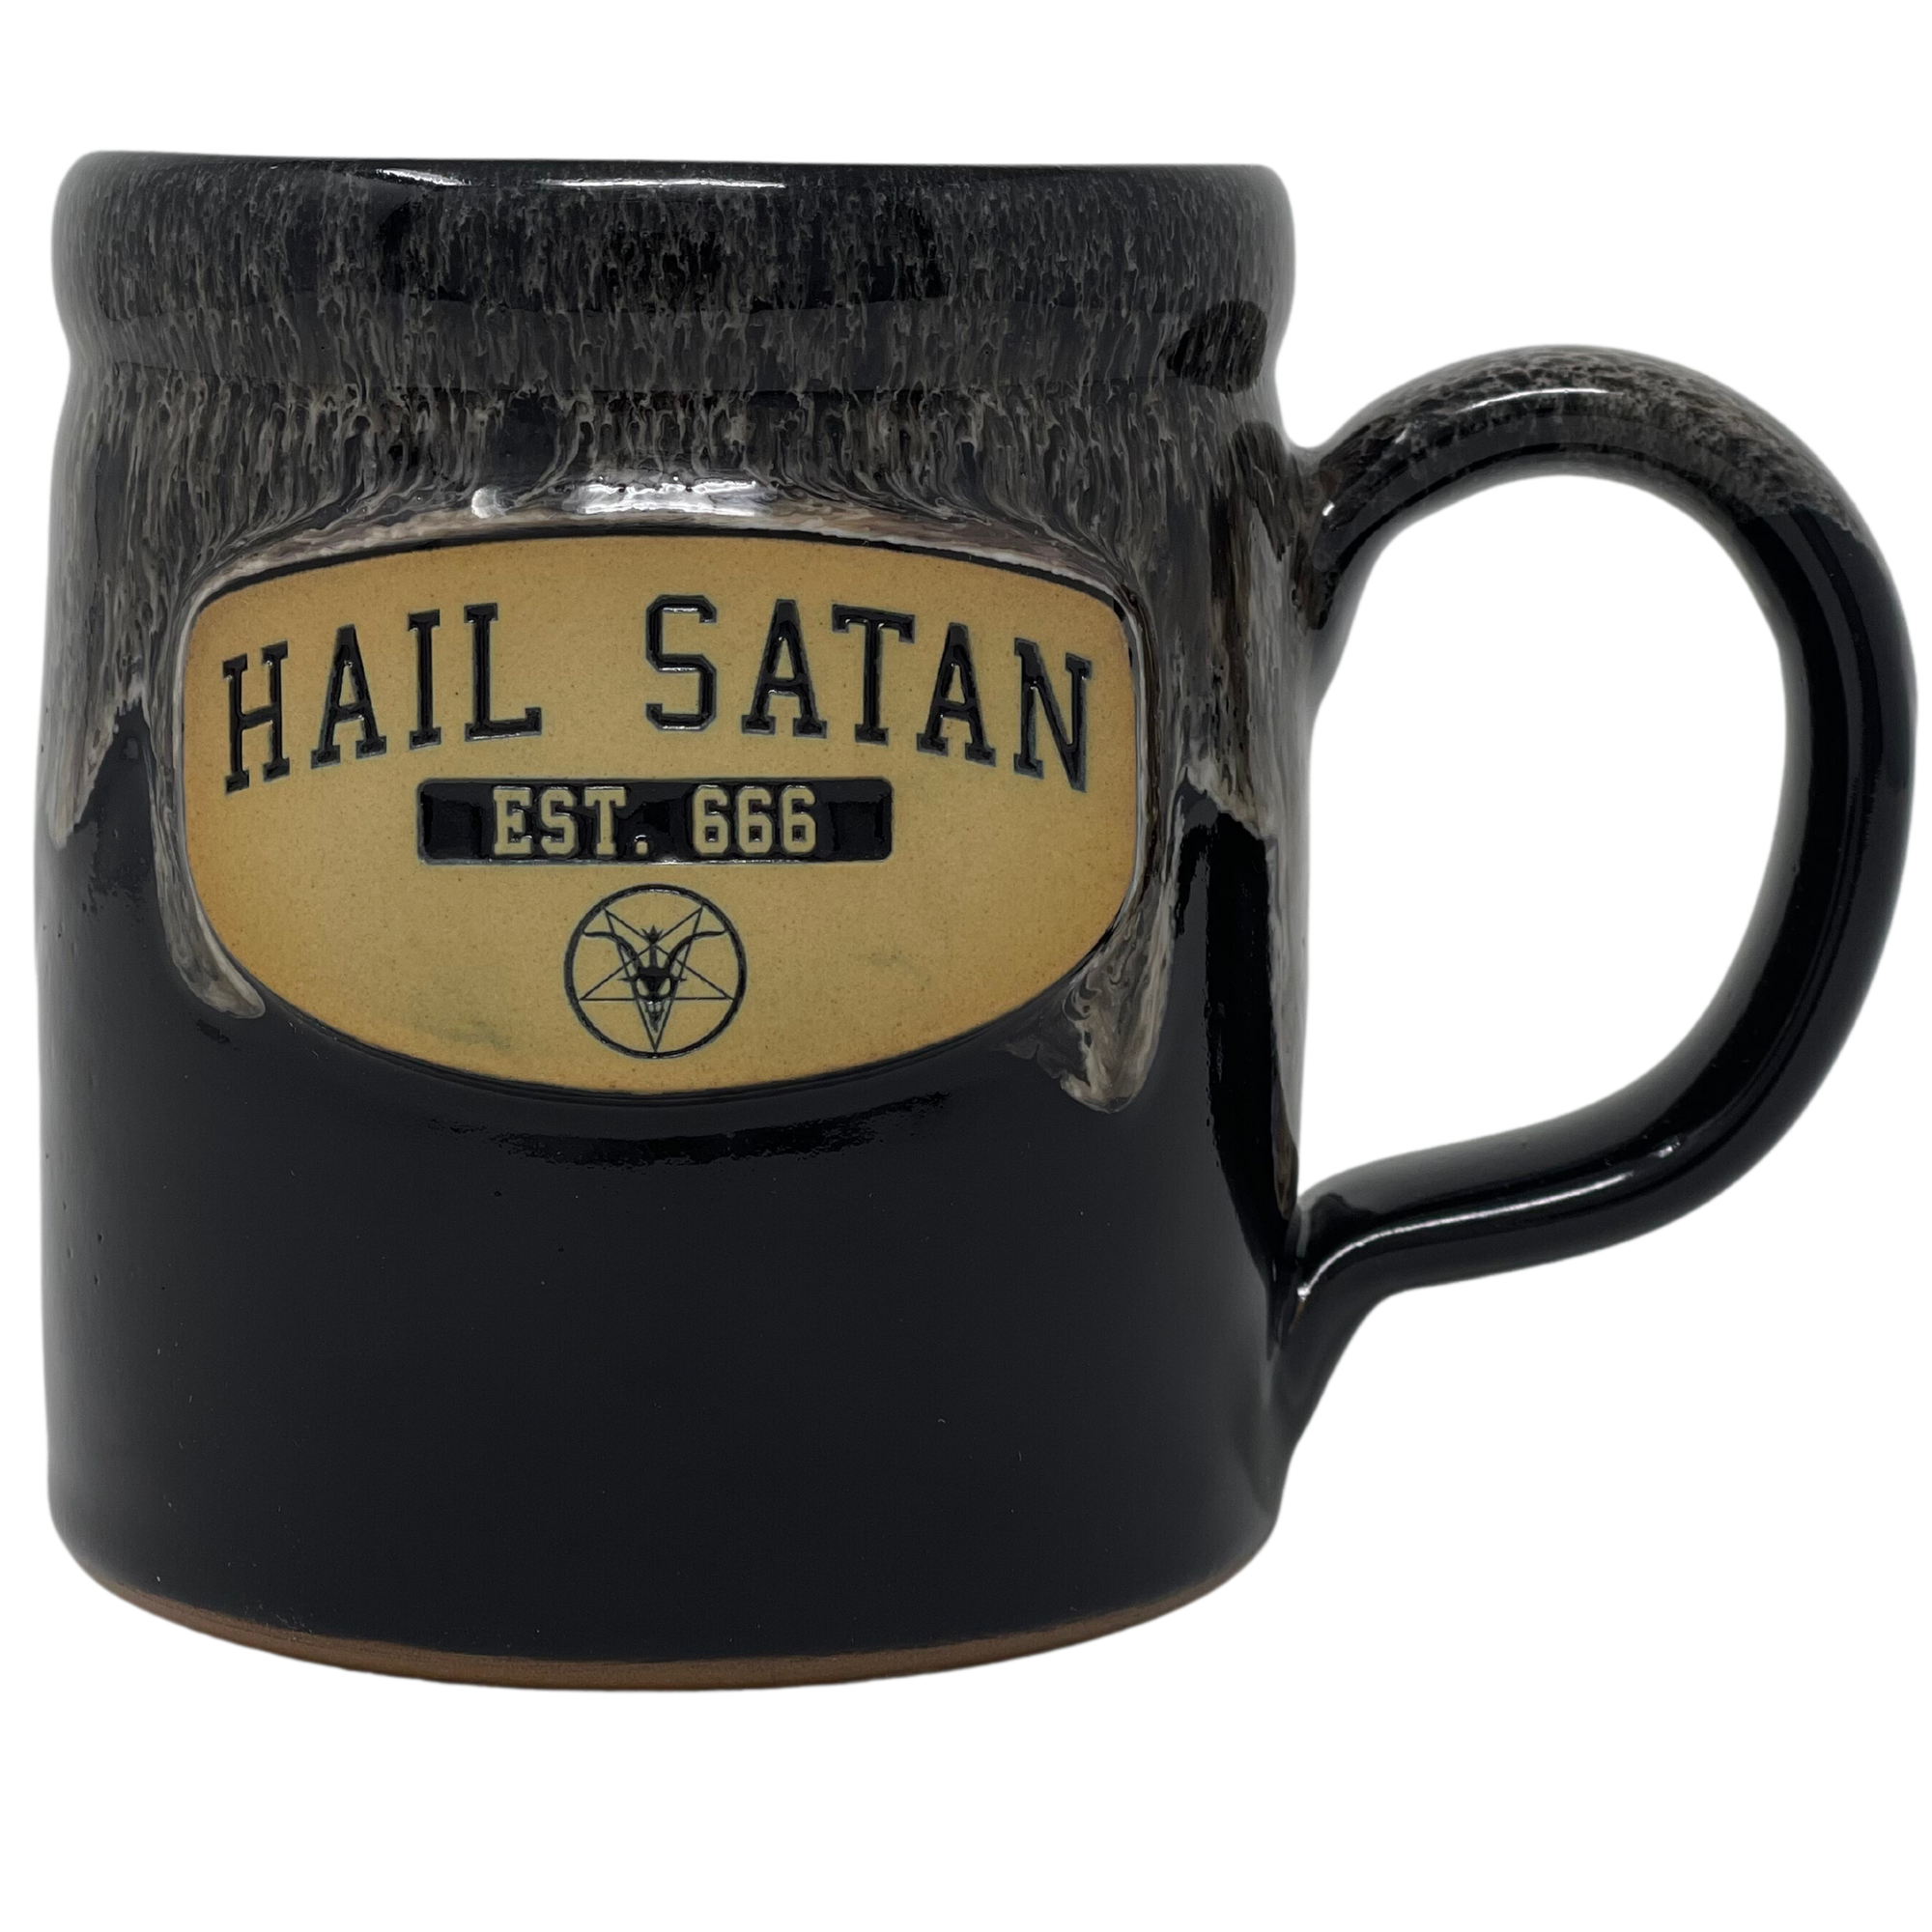 Hail Satan Mug Collection